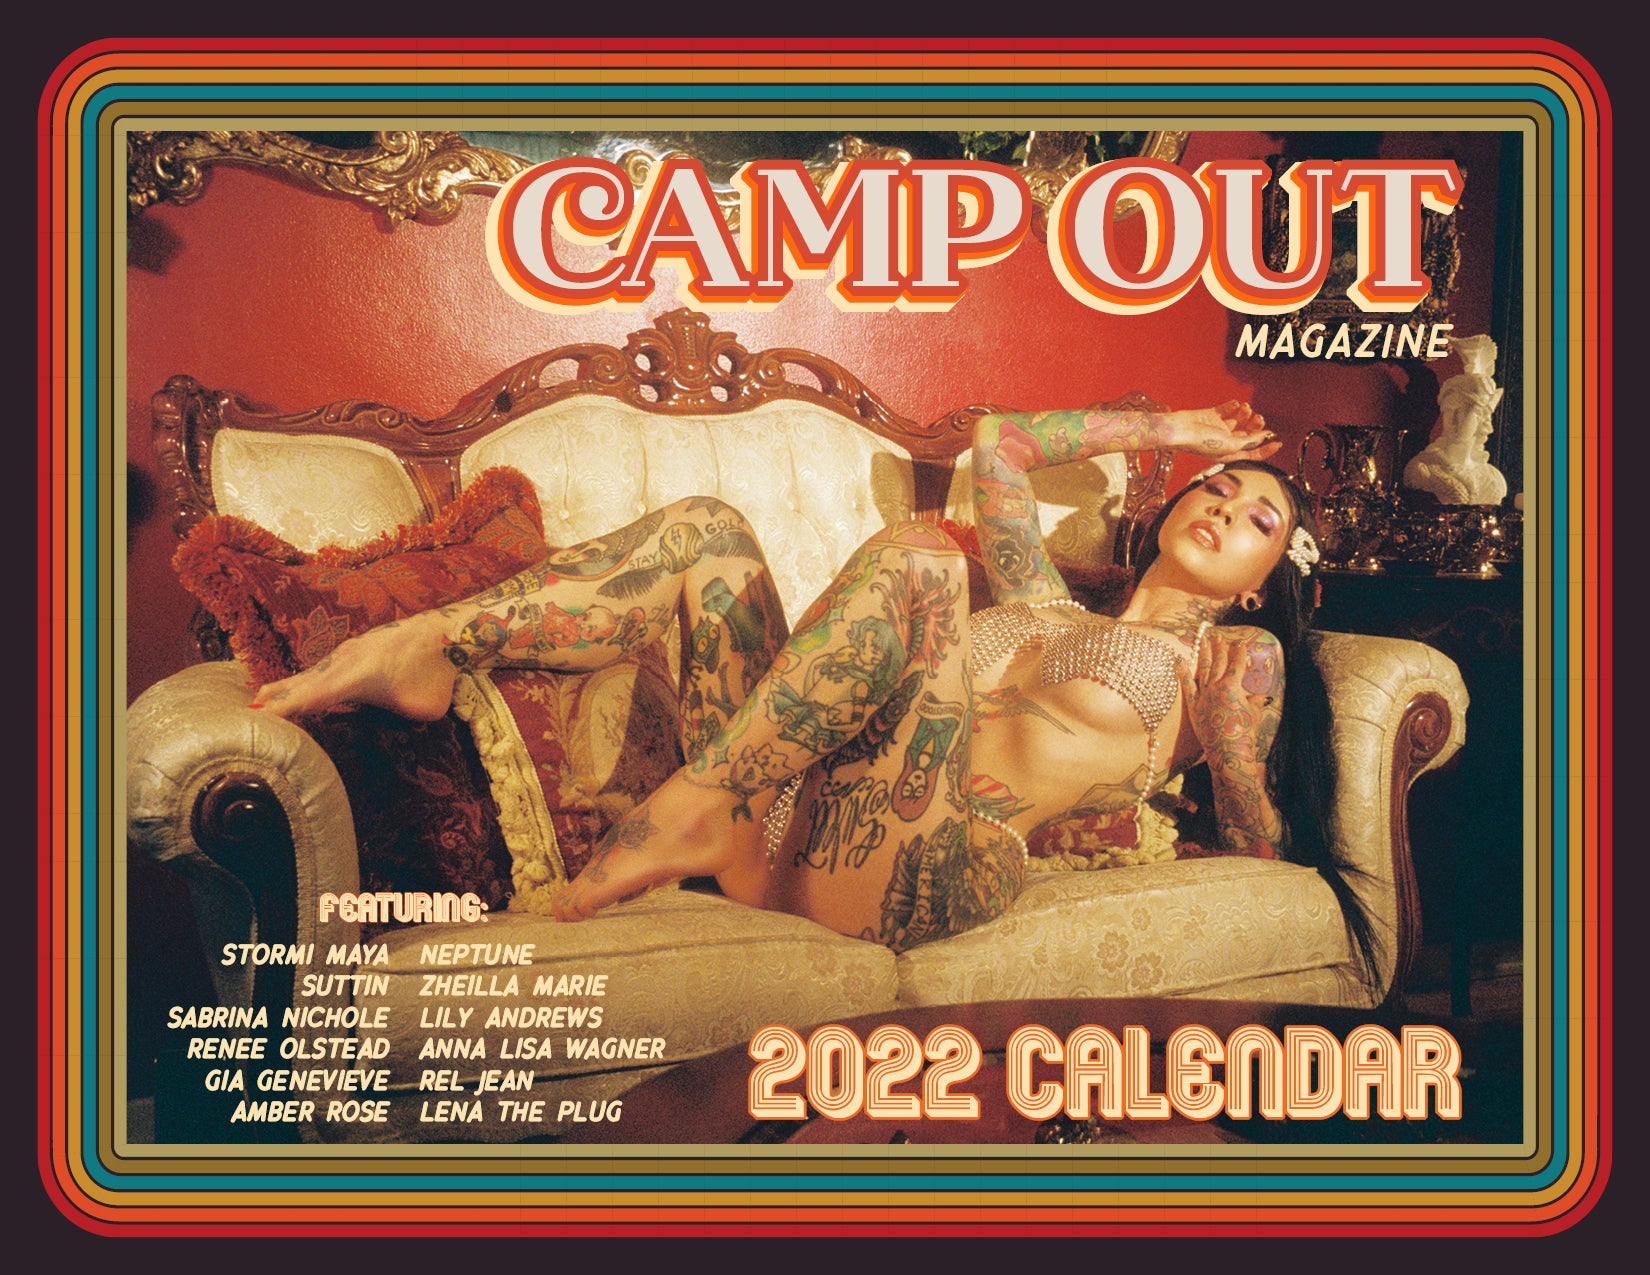 ON SALE NOW! 70's Smut 2022 Calendar